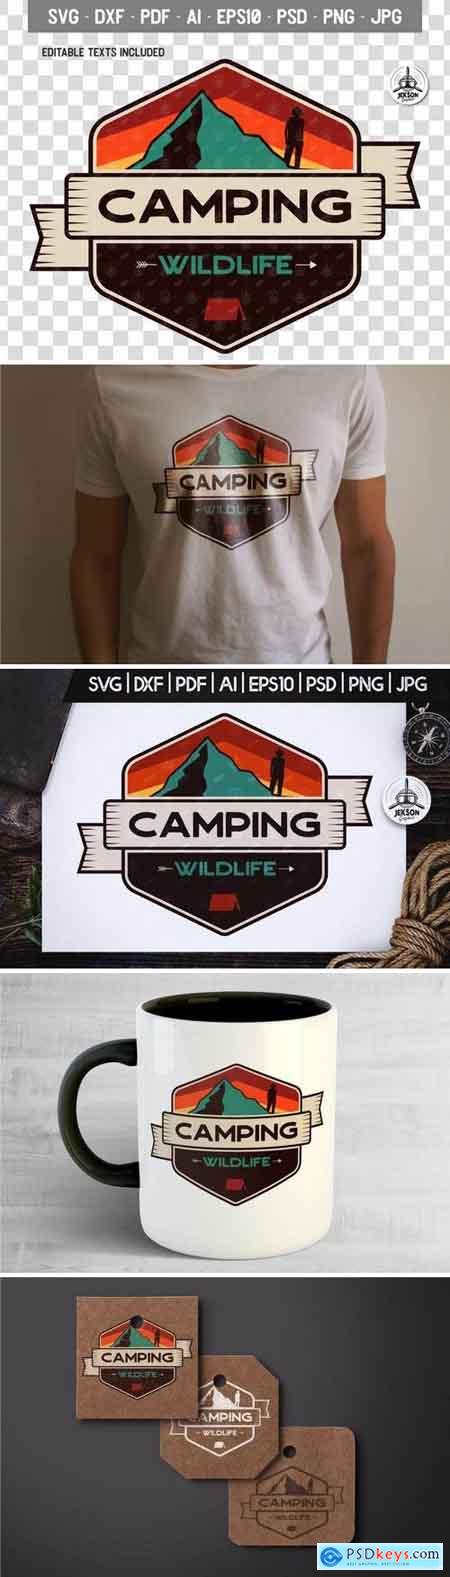 Camping Wild Badge Vintage Travel Logo Patch SVG